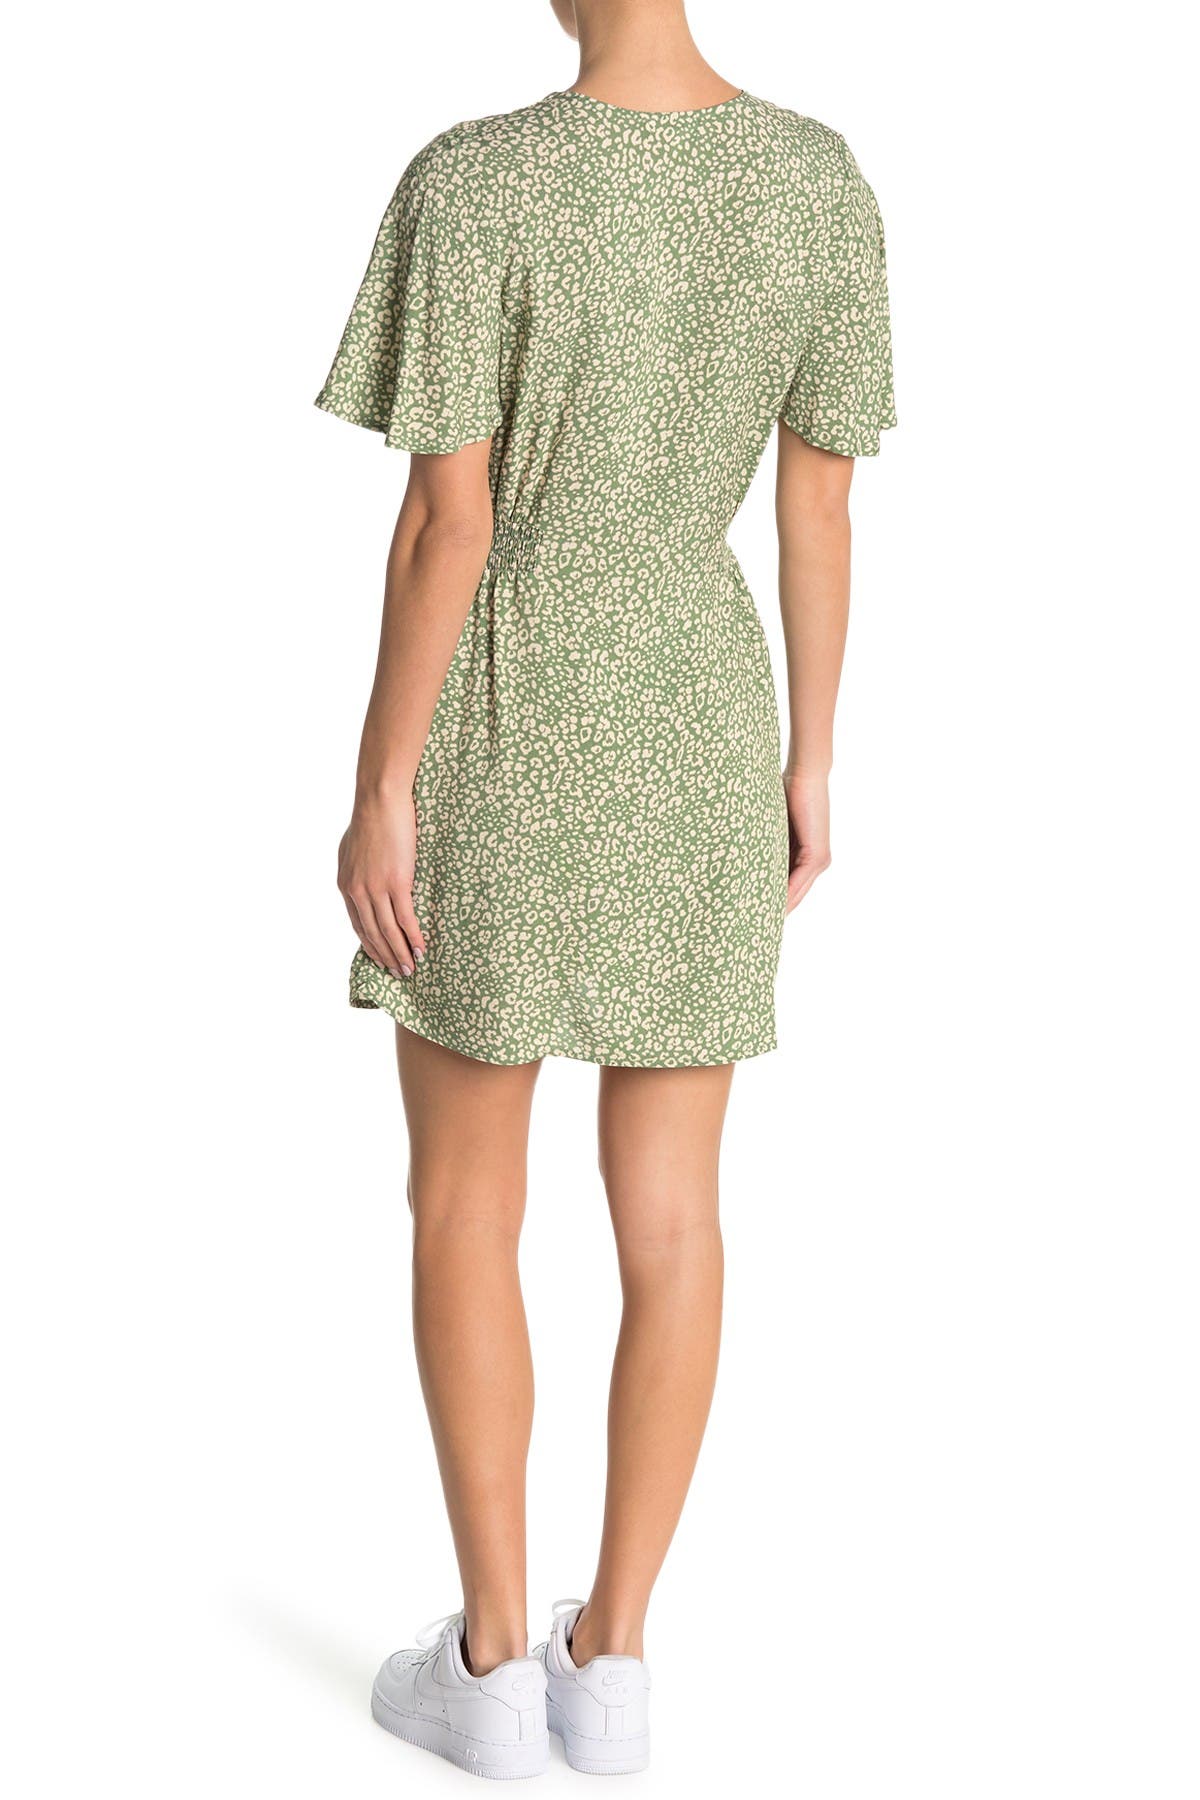 Abound Flutter Sleeve Button Front Dress In Medium Green8